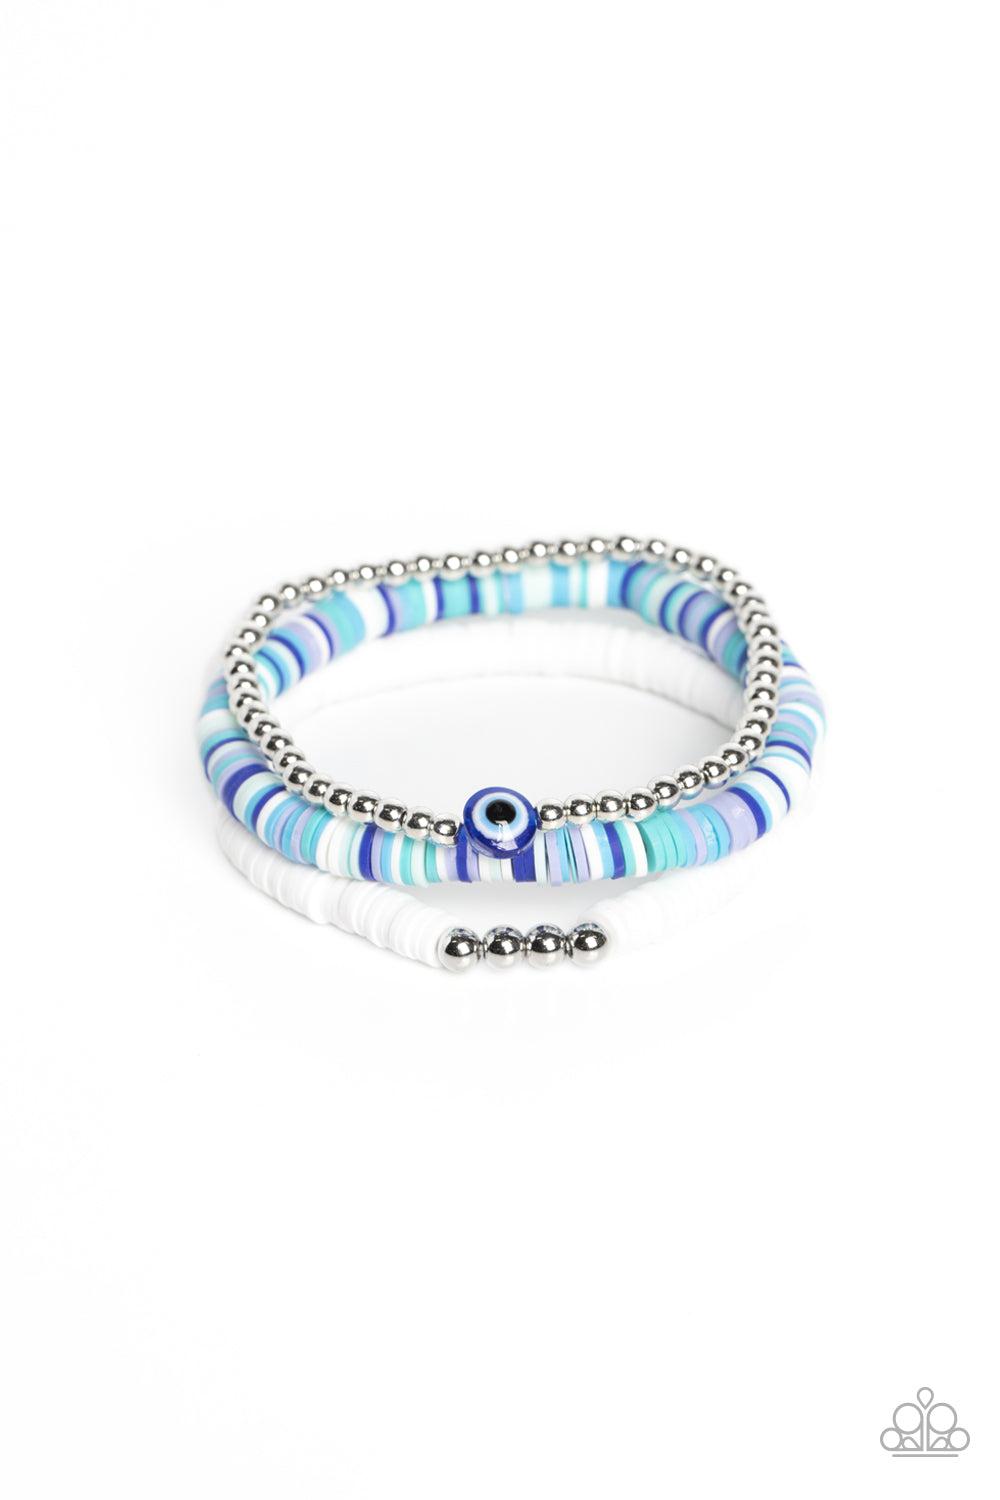 EYE Have A Dream Blue Bracelet - Paparazzi Accessories- lightbox - CarasShop.com - $5 Jewelry by Cara Jewels